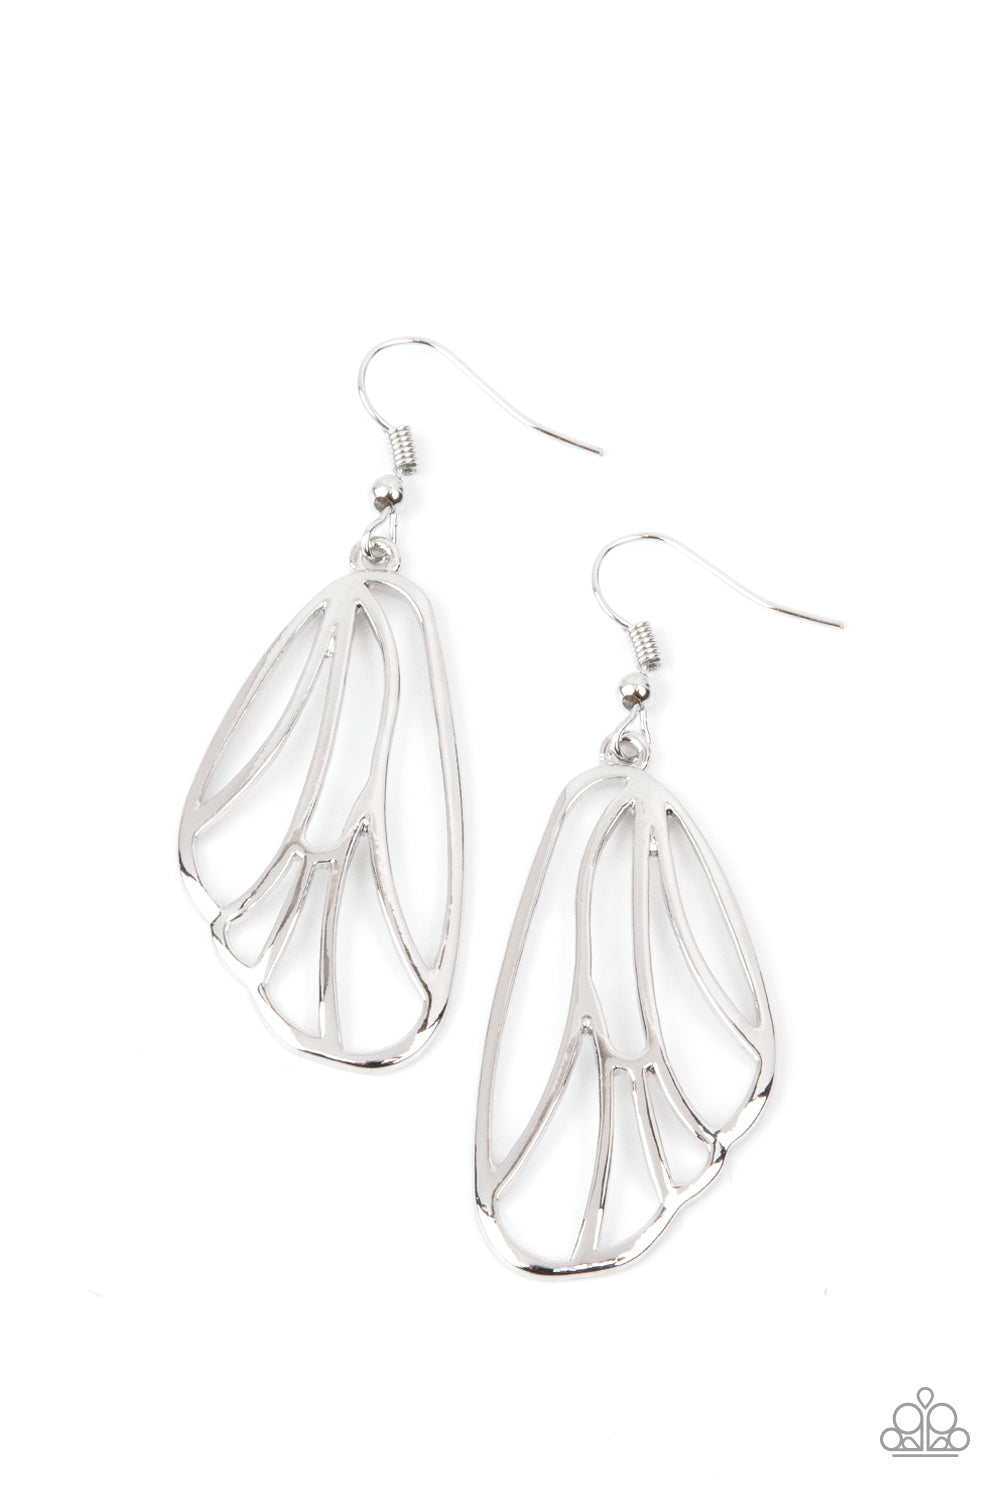 Coadipress, Jewelry, Coadipress Fish Hook Stud Earrings